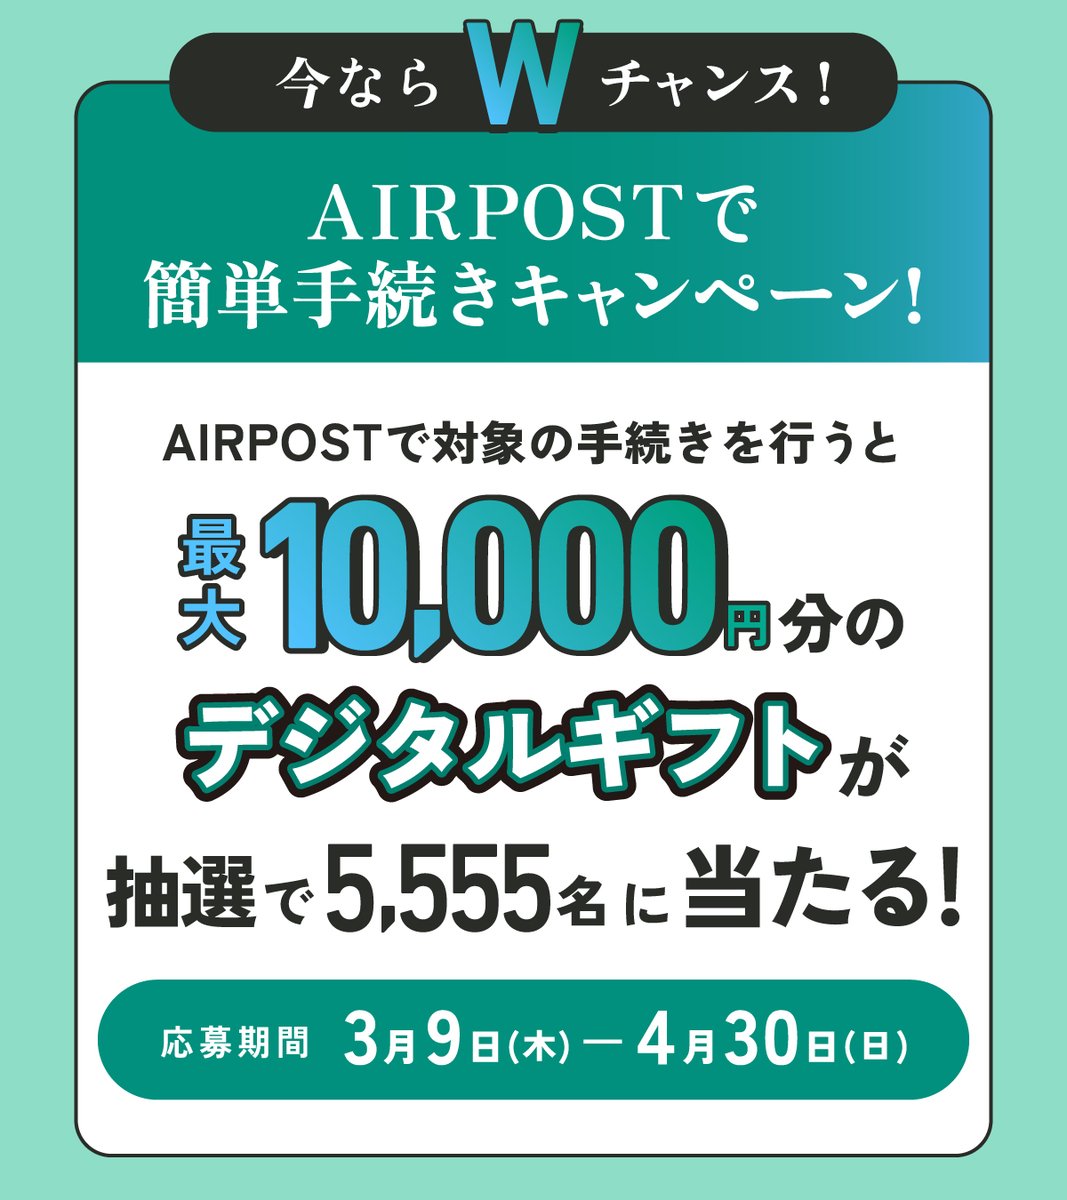 AIRPOST_info tweet picture